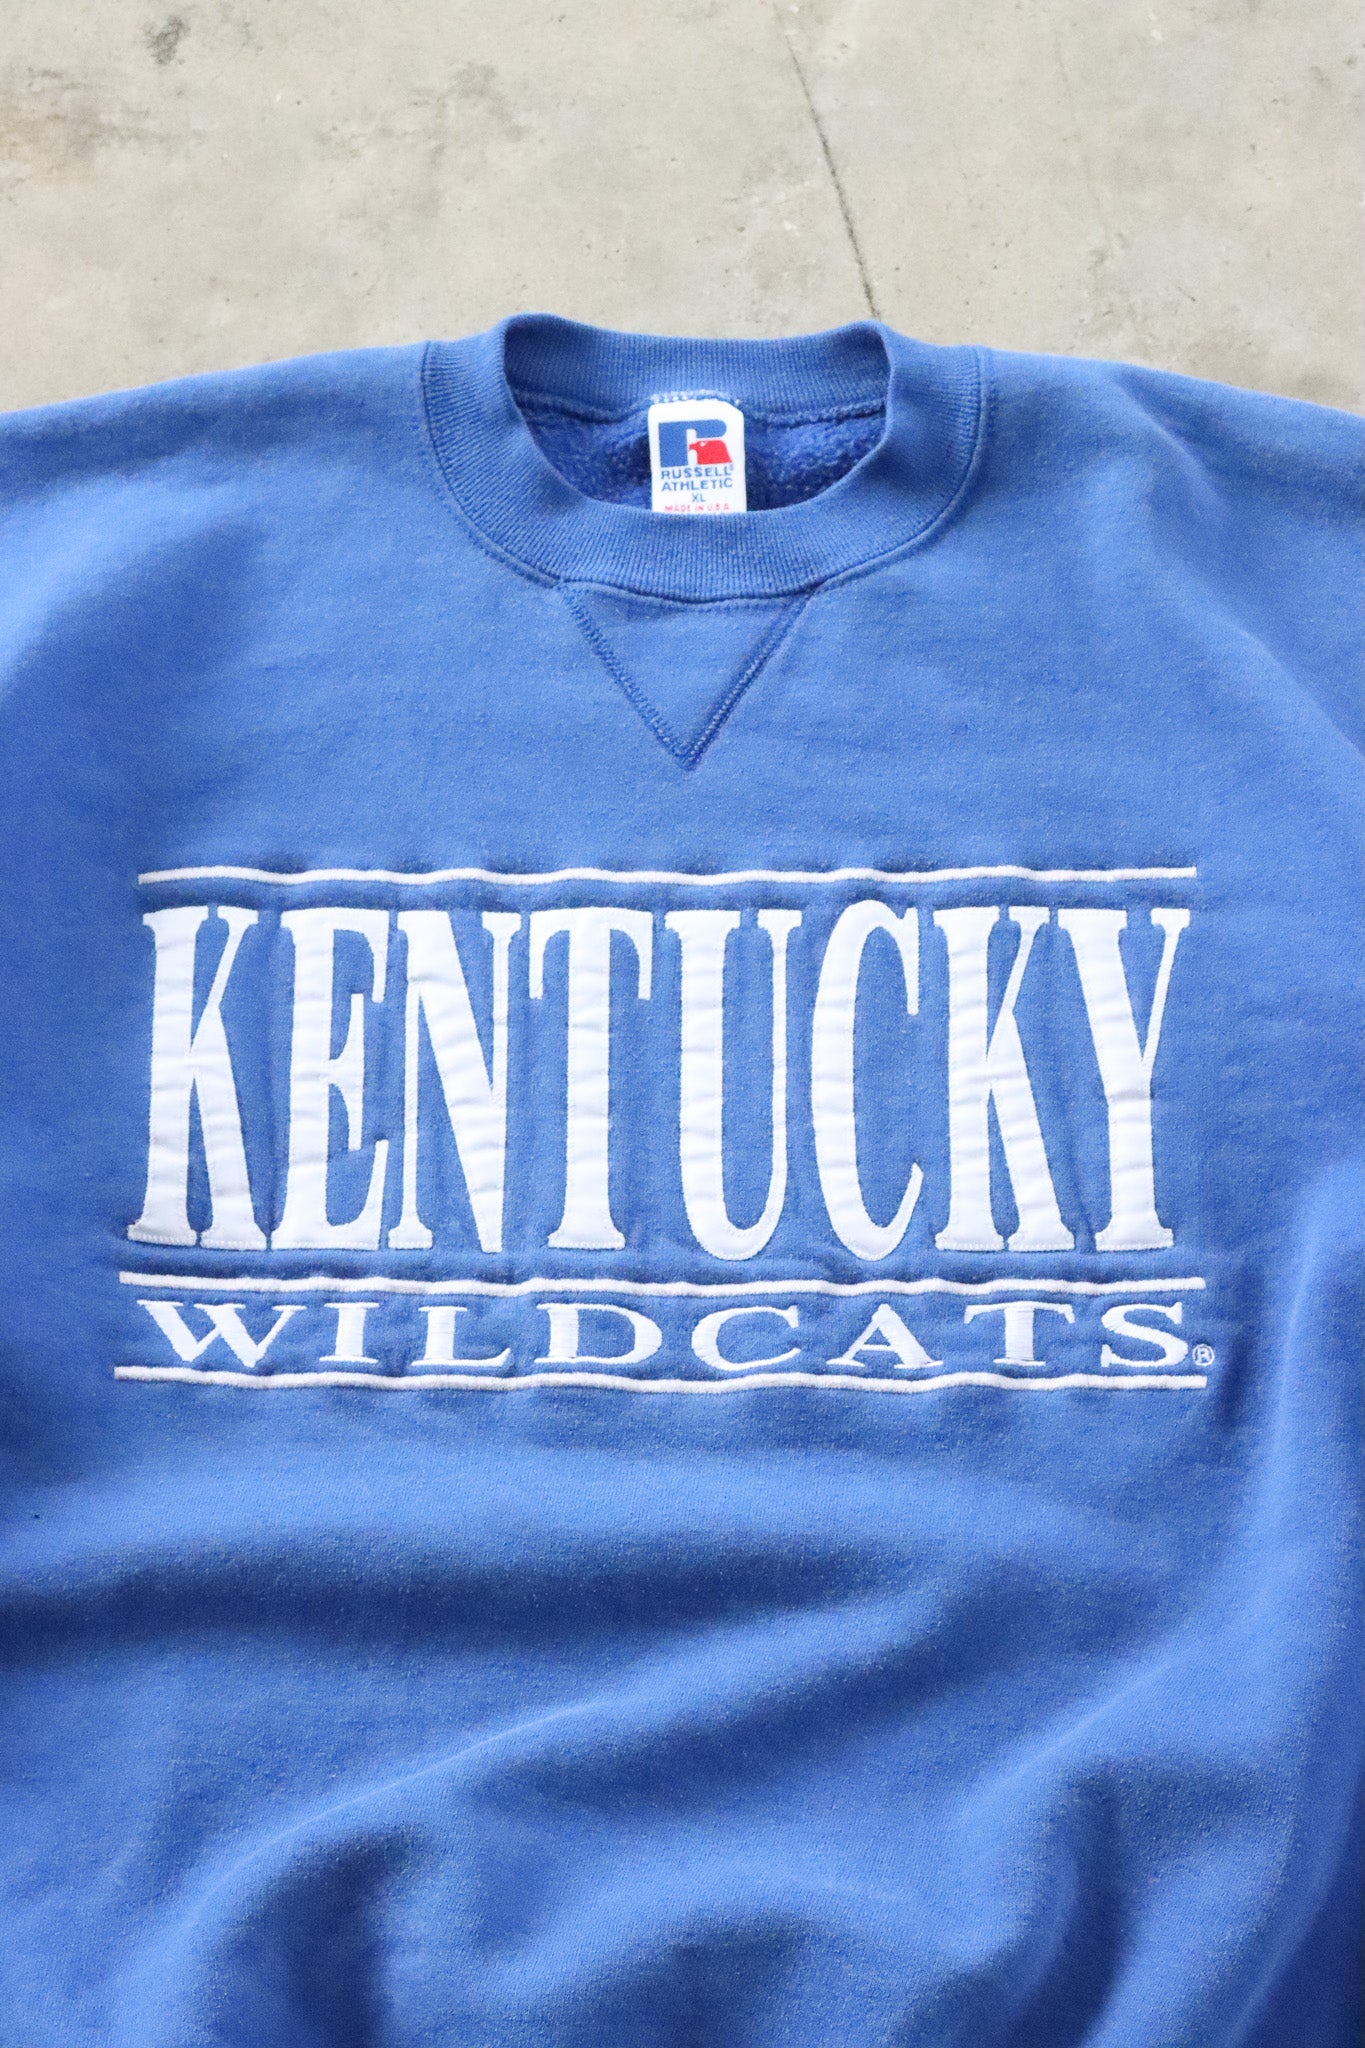 Vintage Kentucky Wildcats Sweater XL